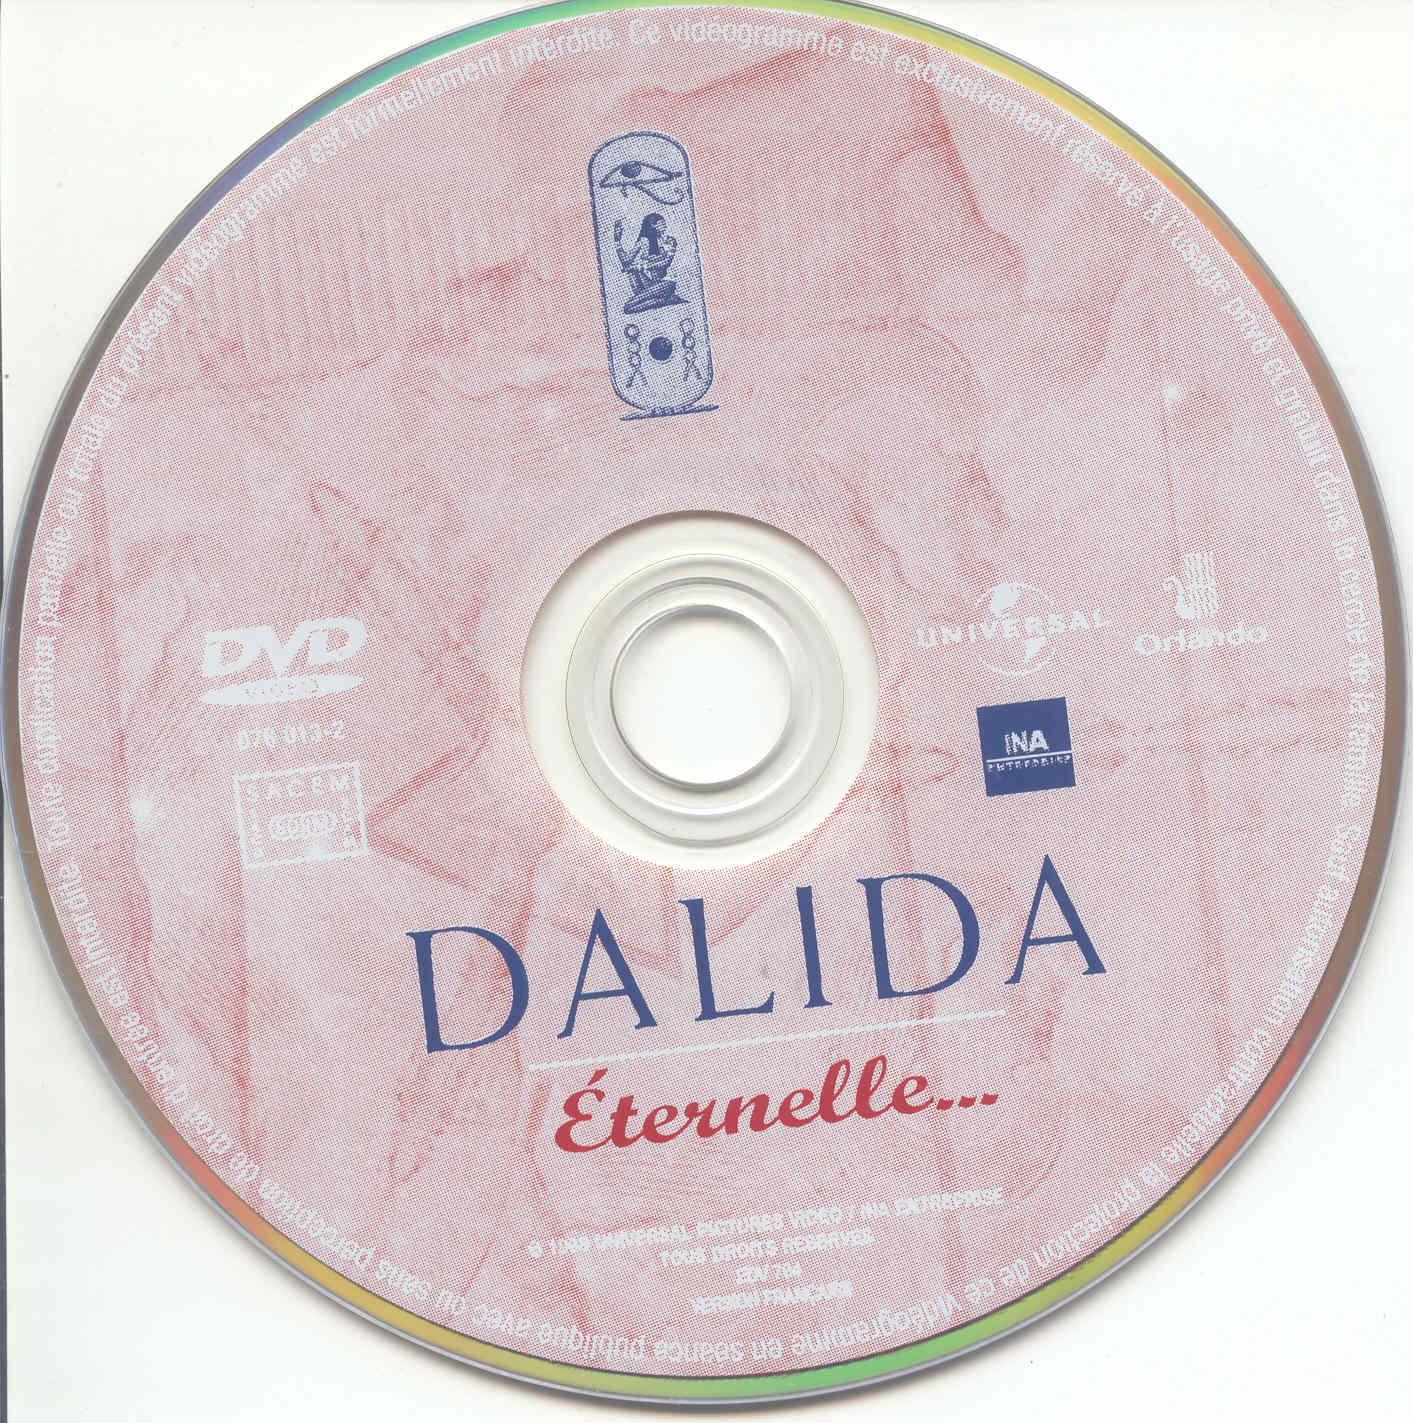 Dalida Eternelle